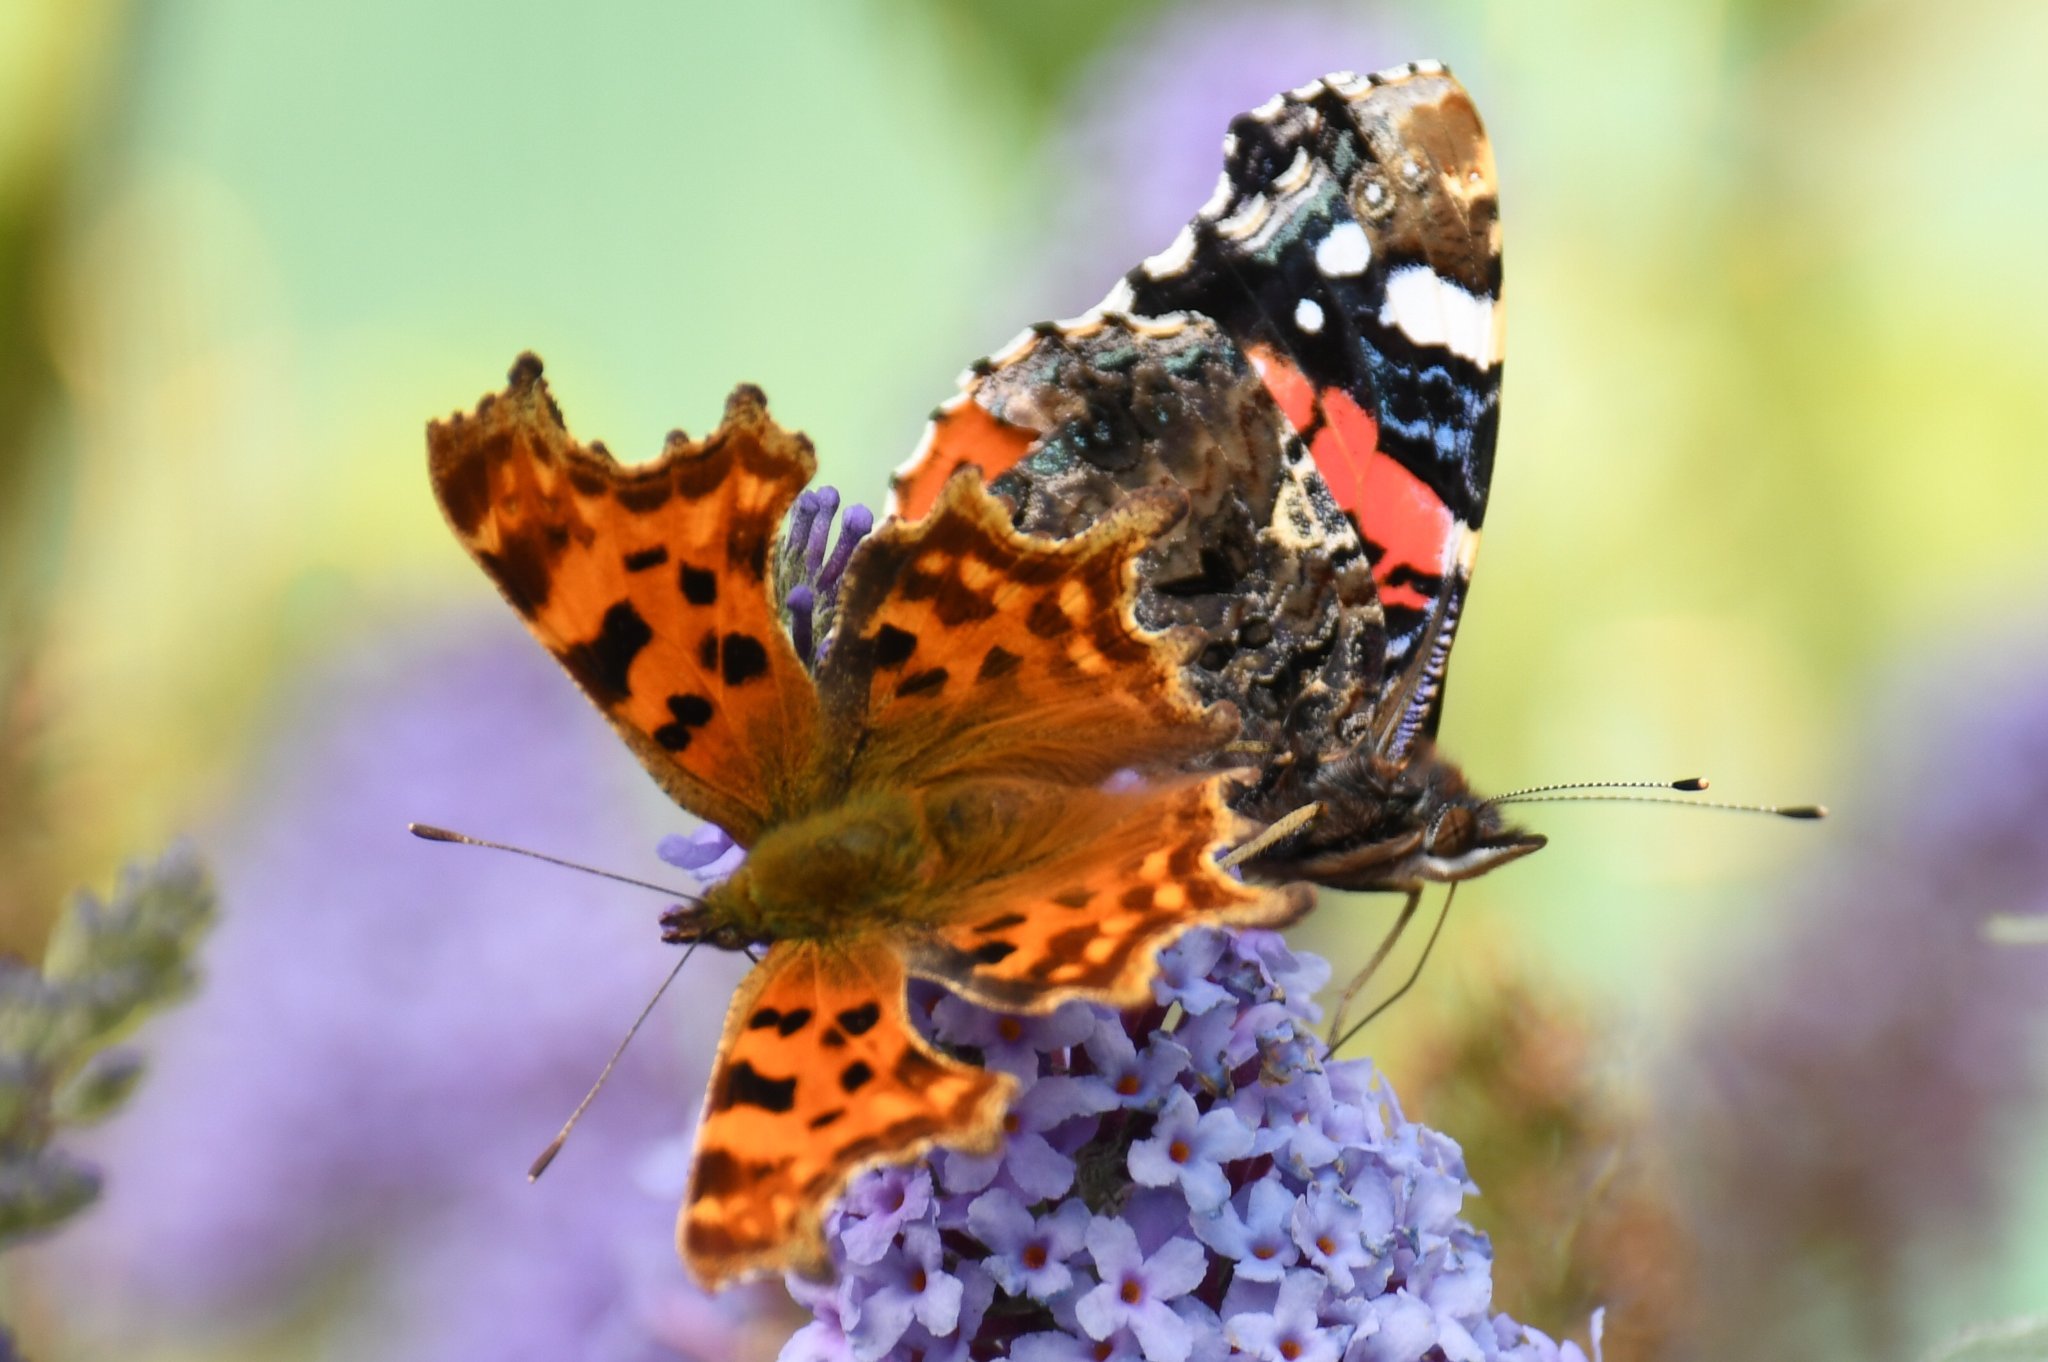 Two friendly butterflies by Paul Wright